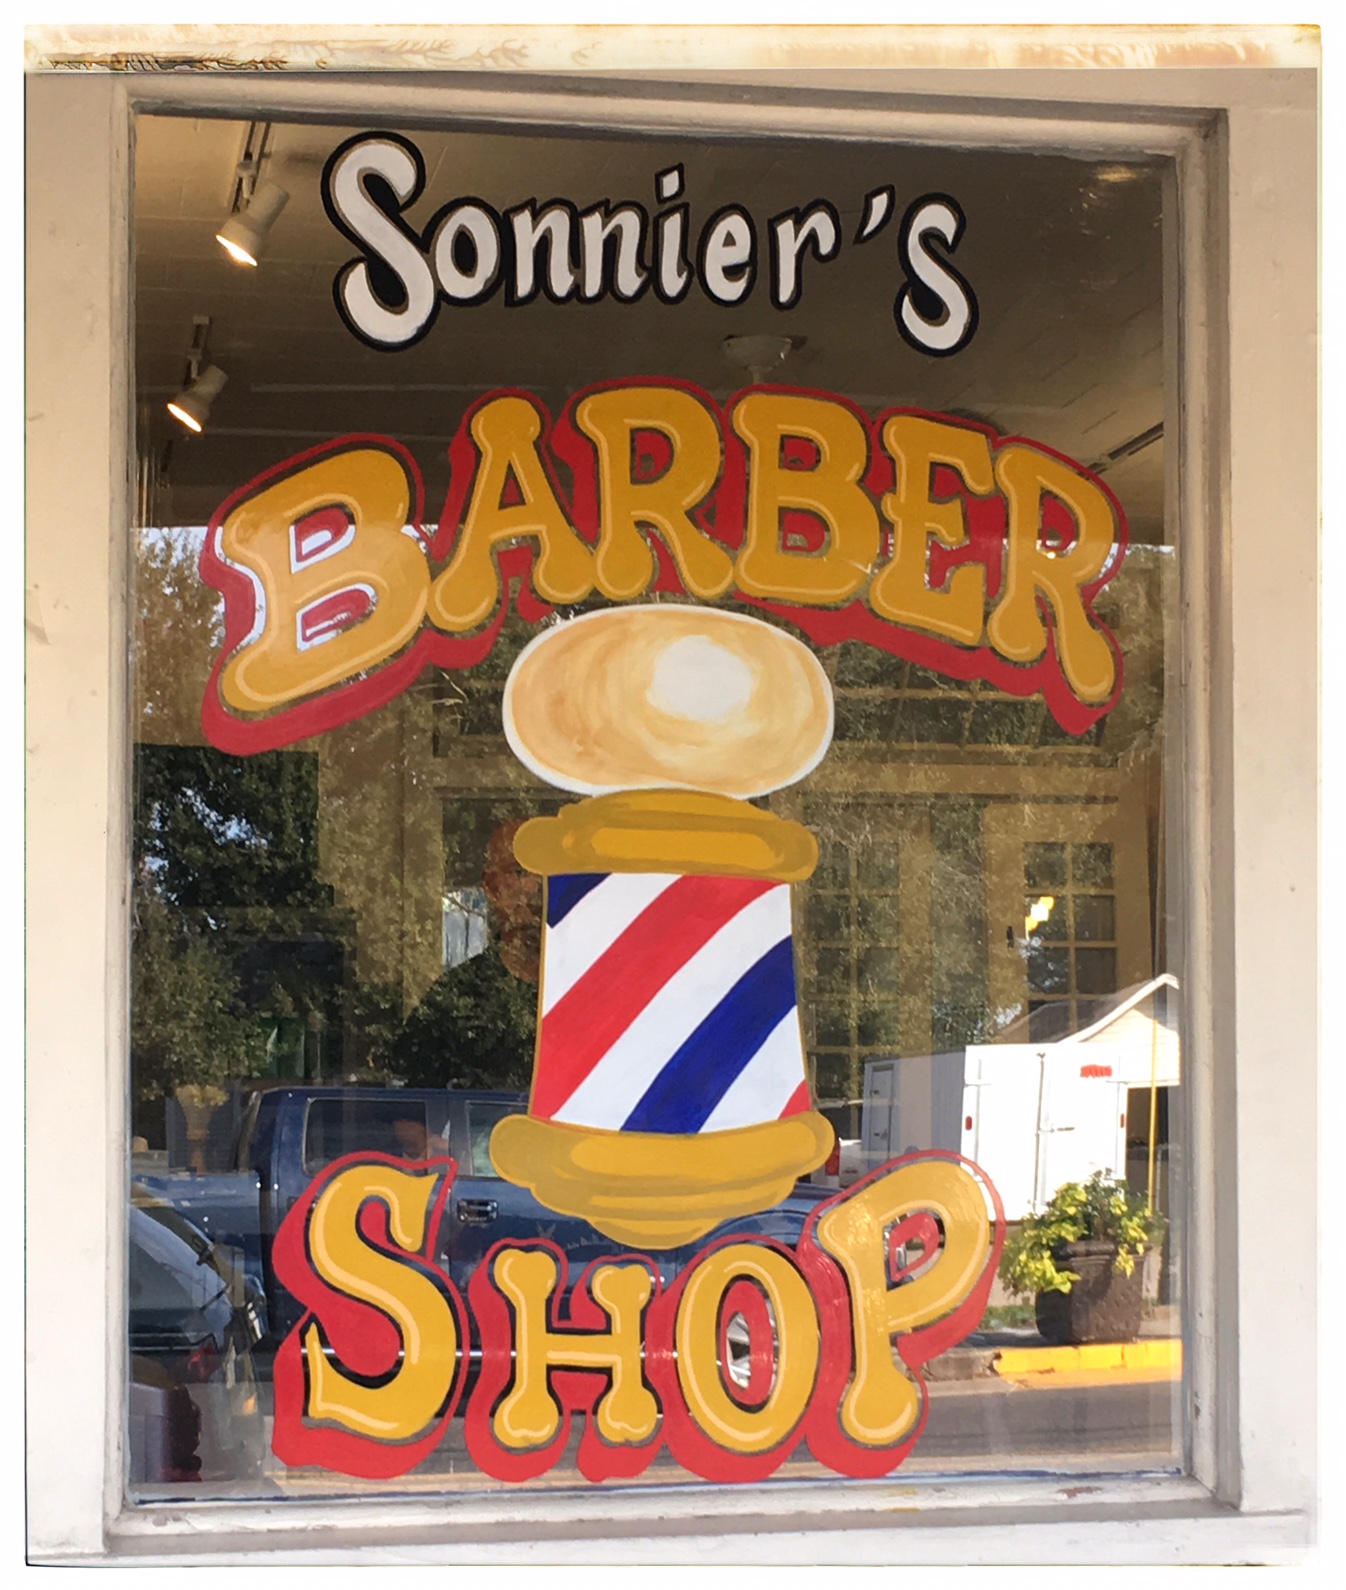 Sonnier's Barber Shop 111 N Main St, Breaux Bridge Louisiana 70517